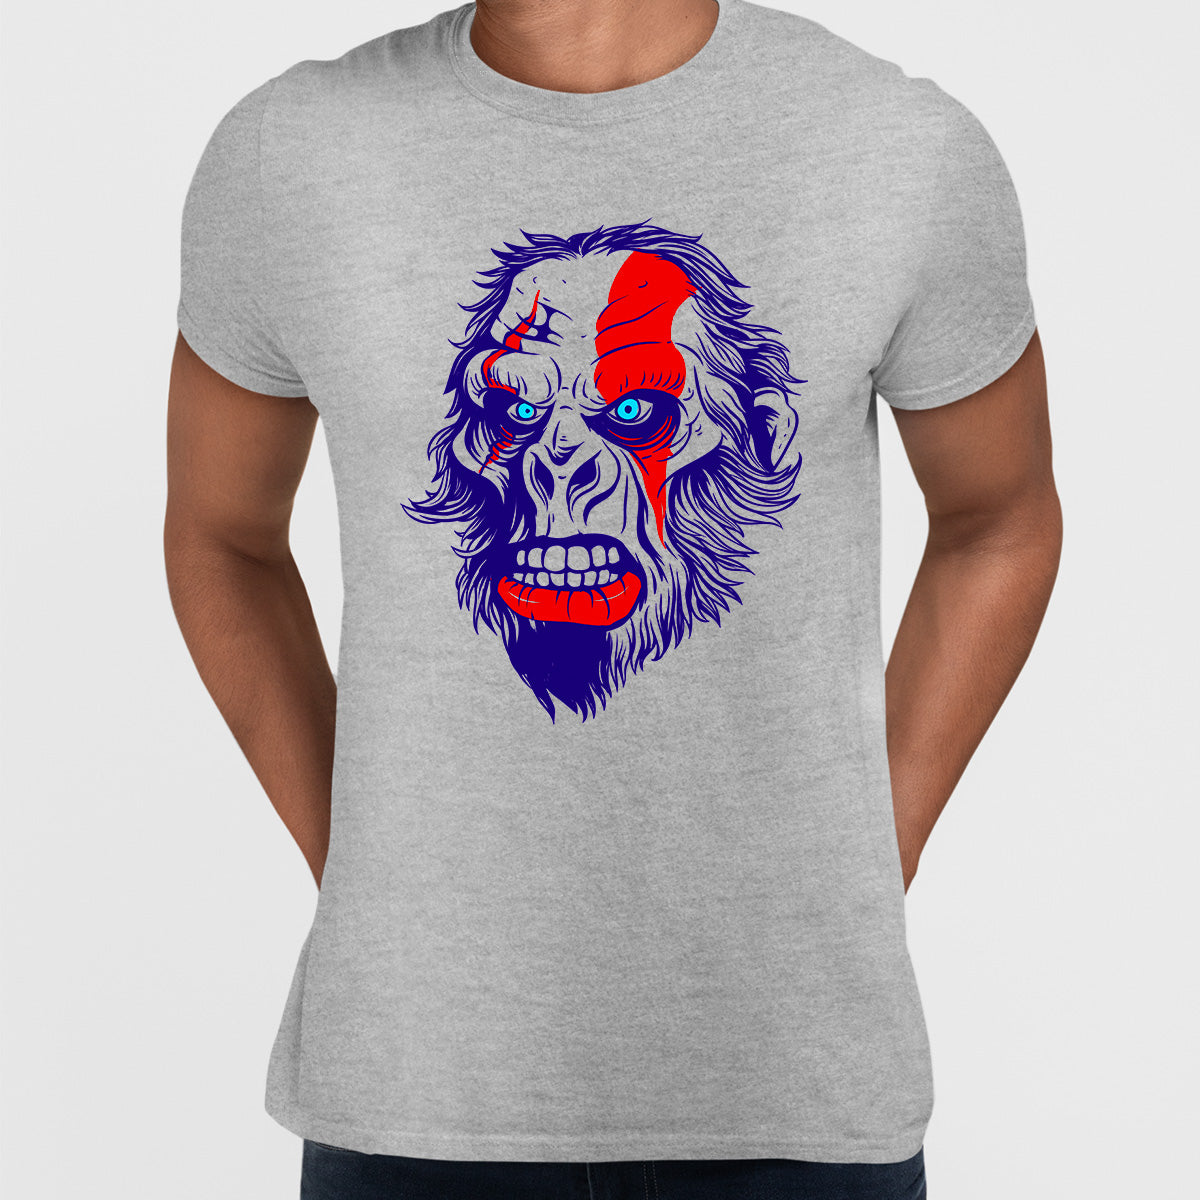 Pop Culture T-Shirt God Of War - Gorilla You can't got wrong, with King Kong! - Kuzi Tees